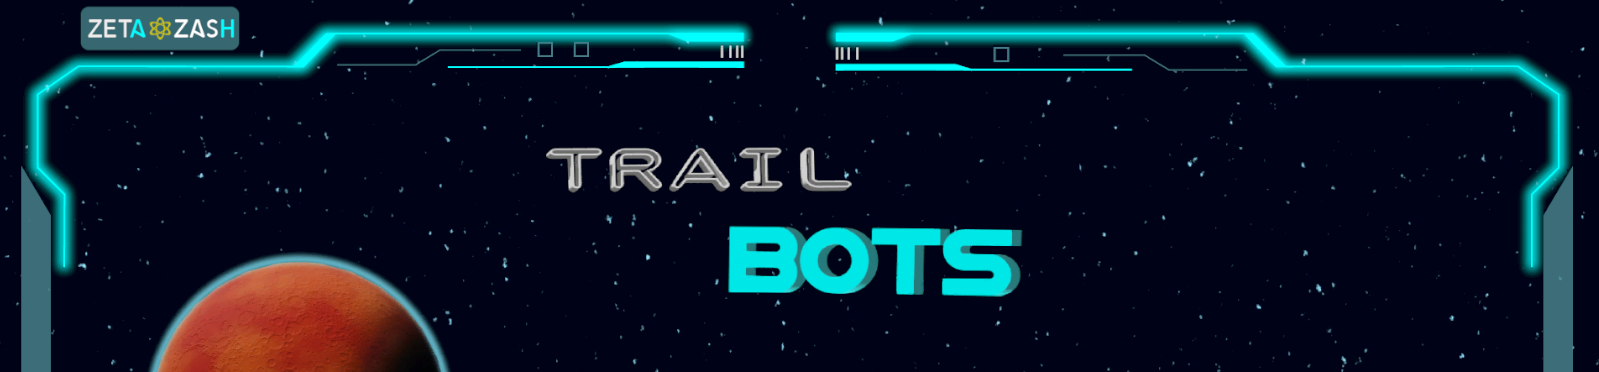 Trailbots